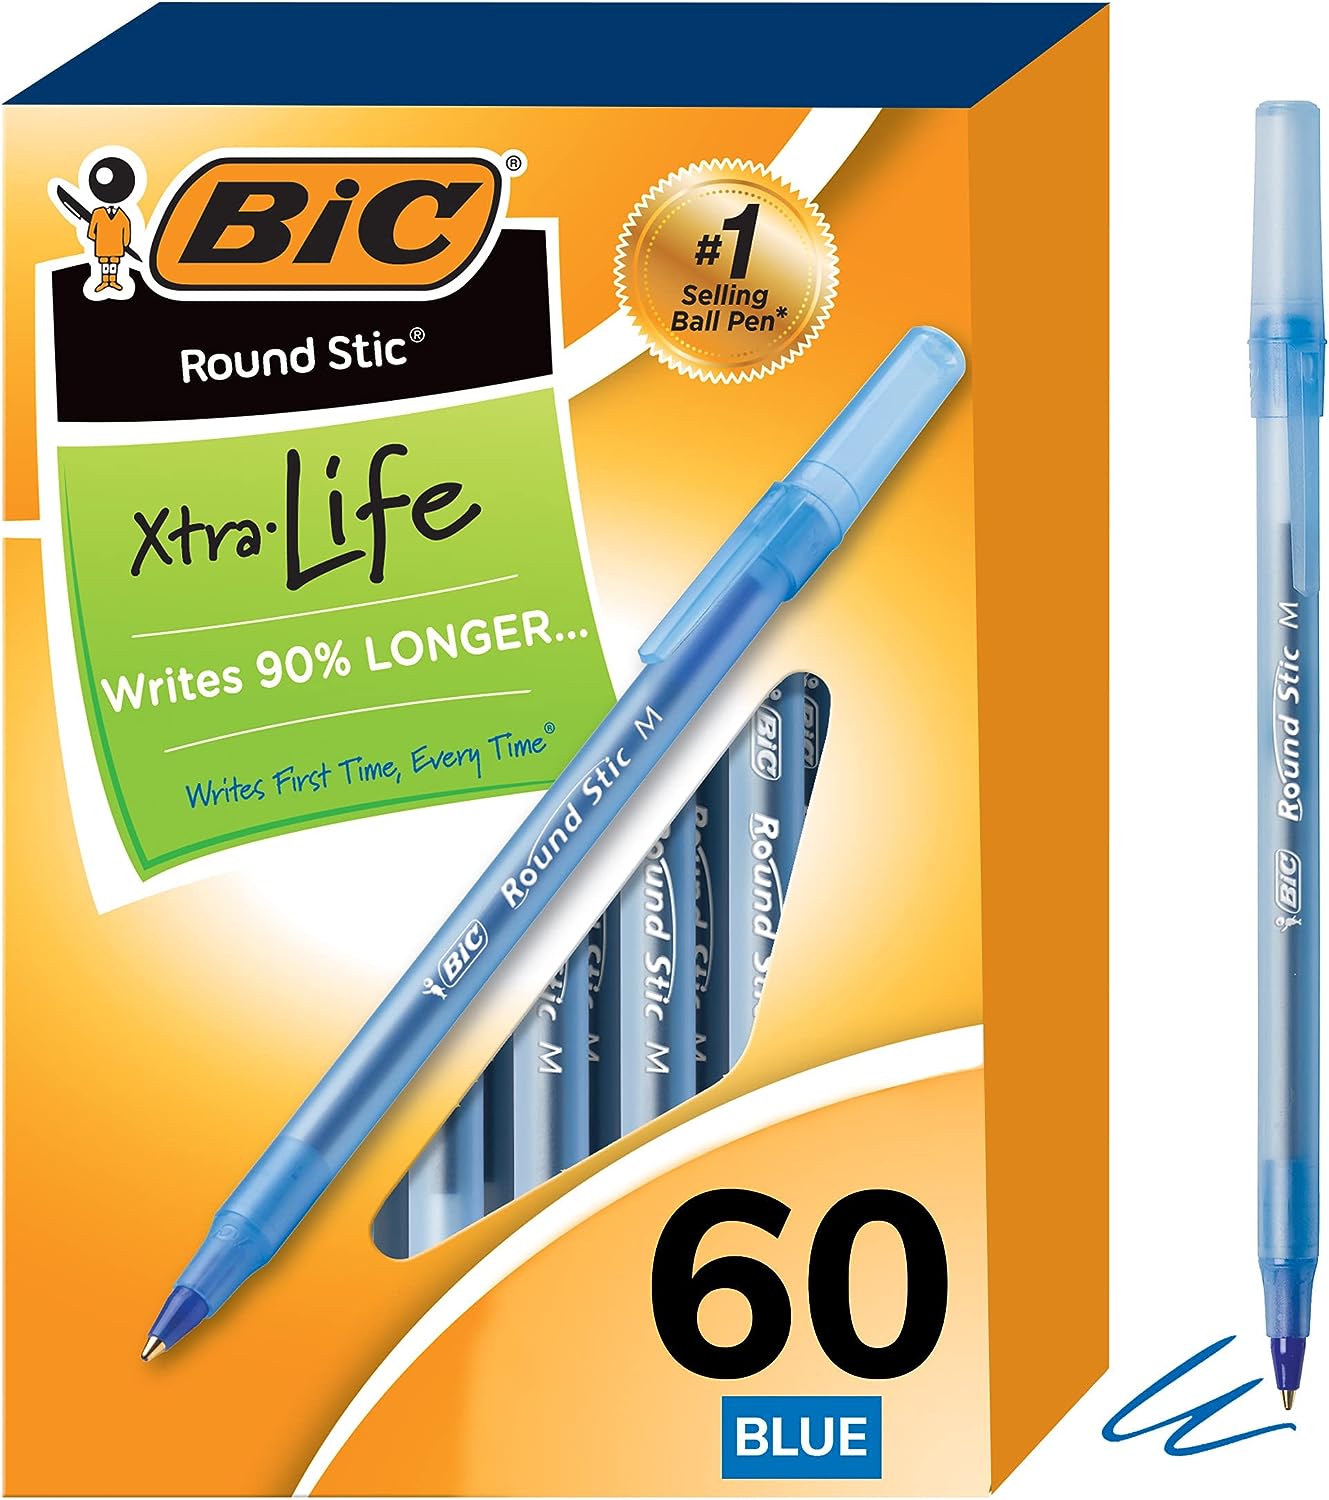 BIC Round Stic Xtra Life Ballpoint Pens, Medium Point (1.0mm), Blue, 60-Count